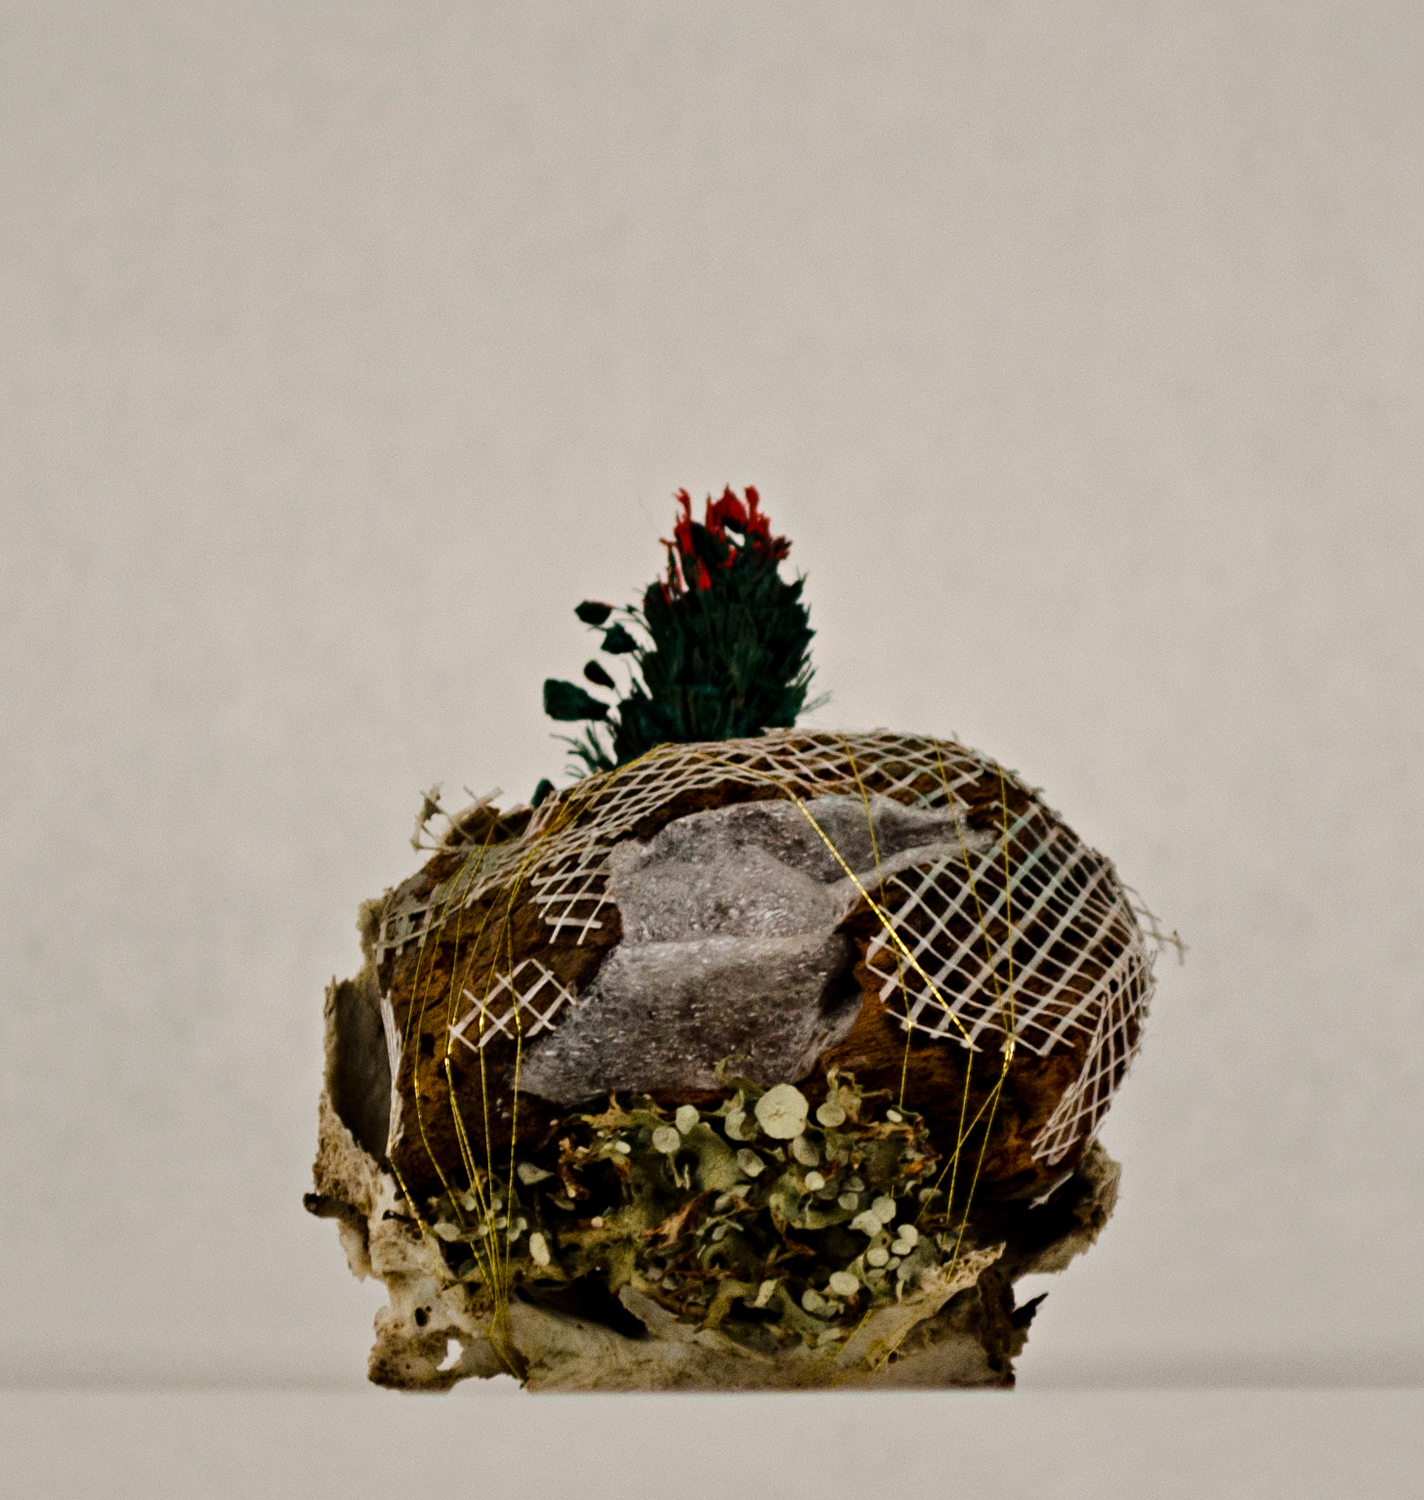 Jessica Lund, “the pines," 2015. Bone, drywall tape, foam, thread, lichen, pine cone, paint, 4 x 3 x 3 in.